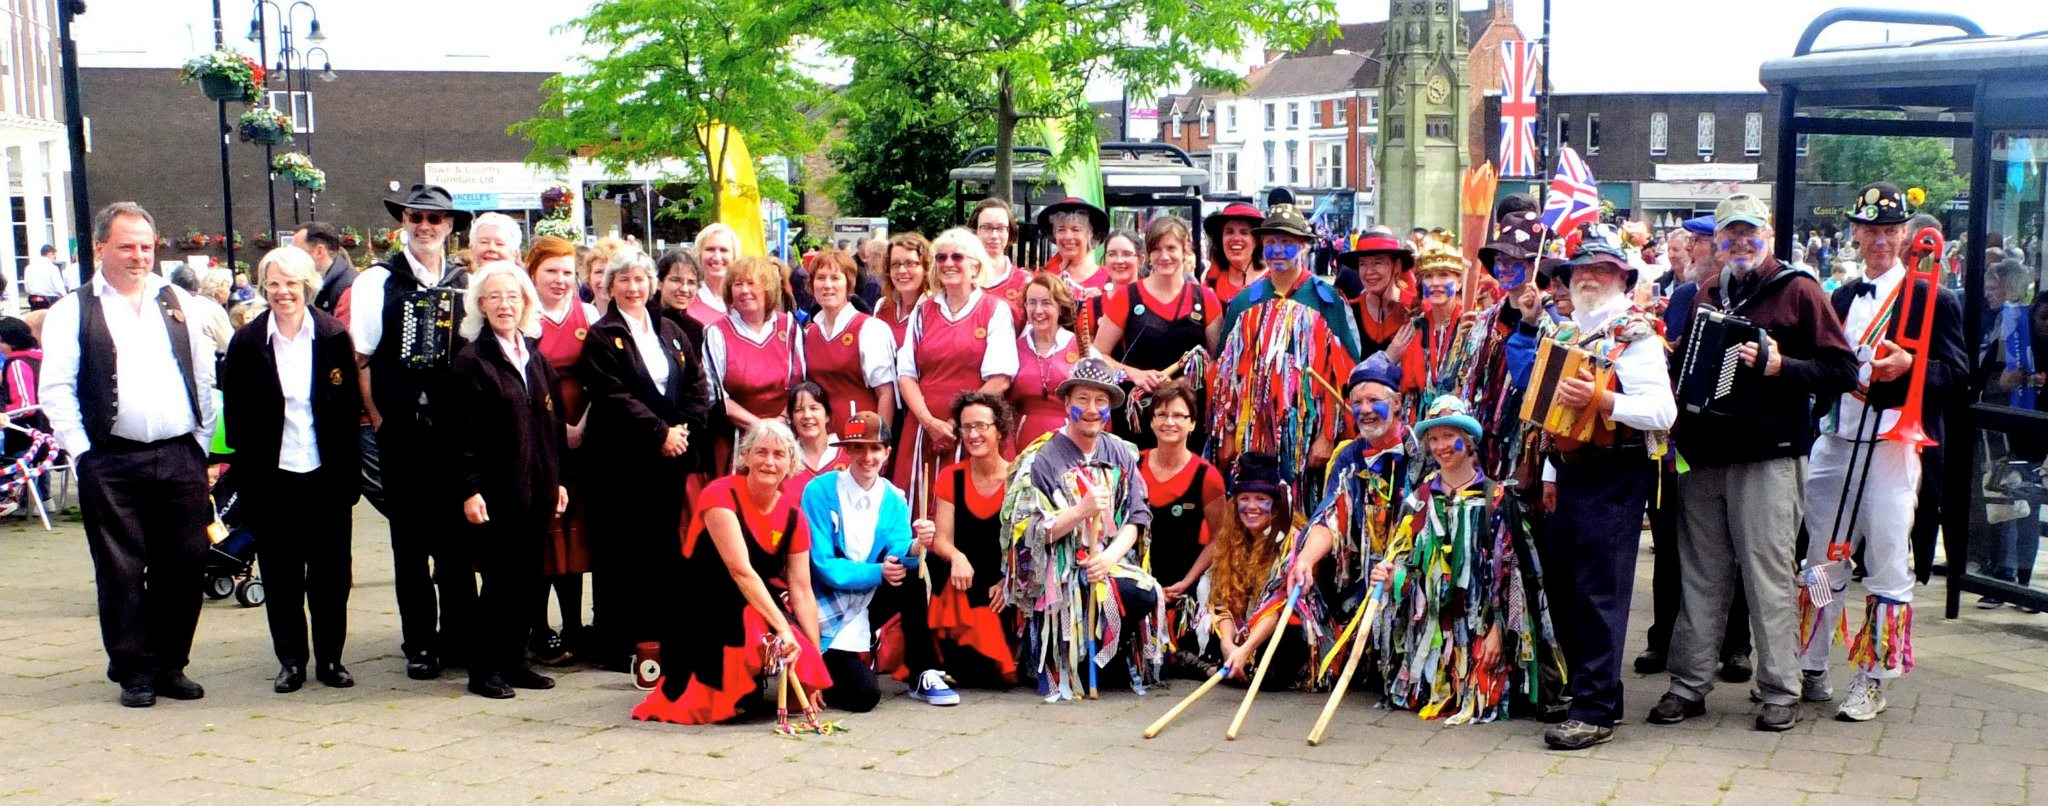 Brasstown Morris Dancers in England.